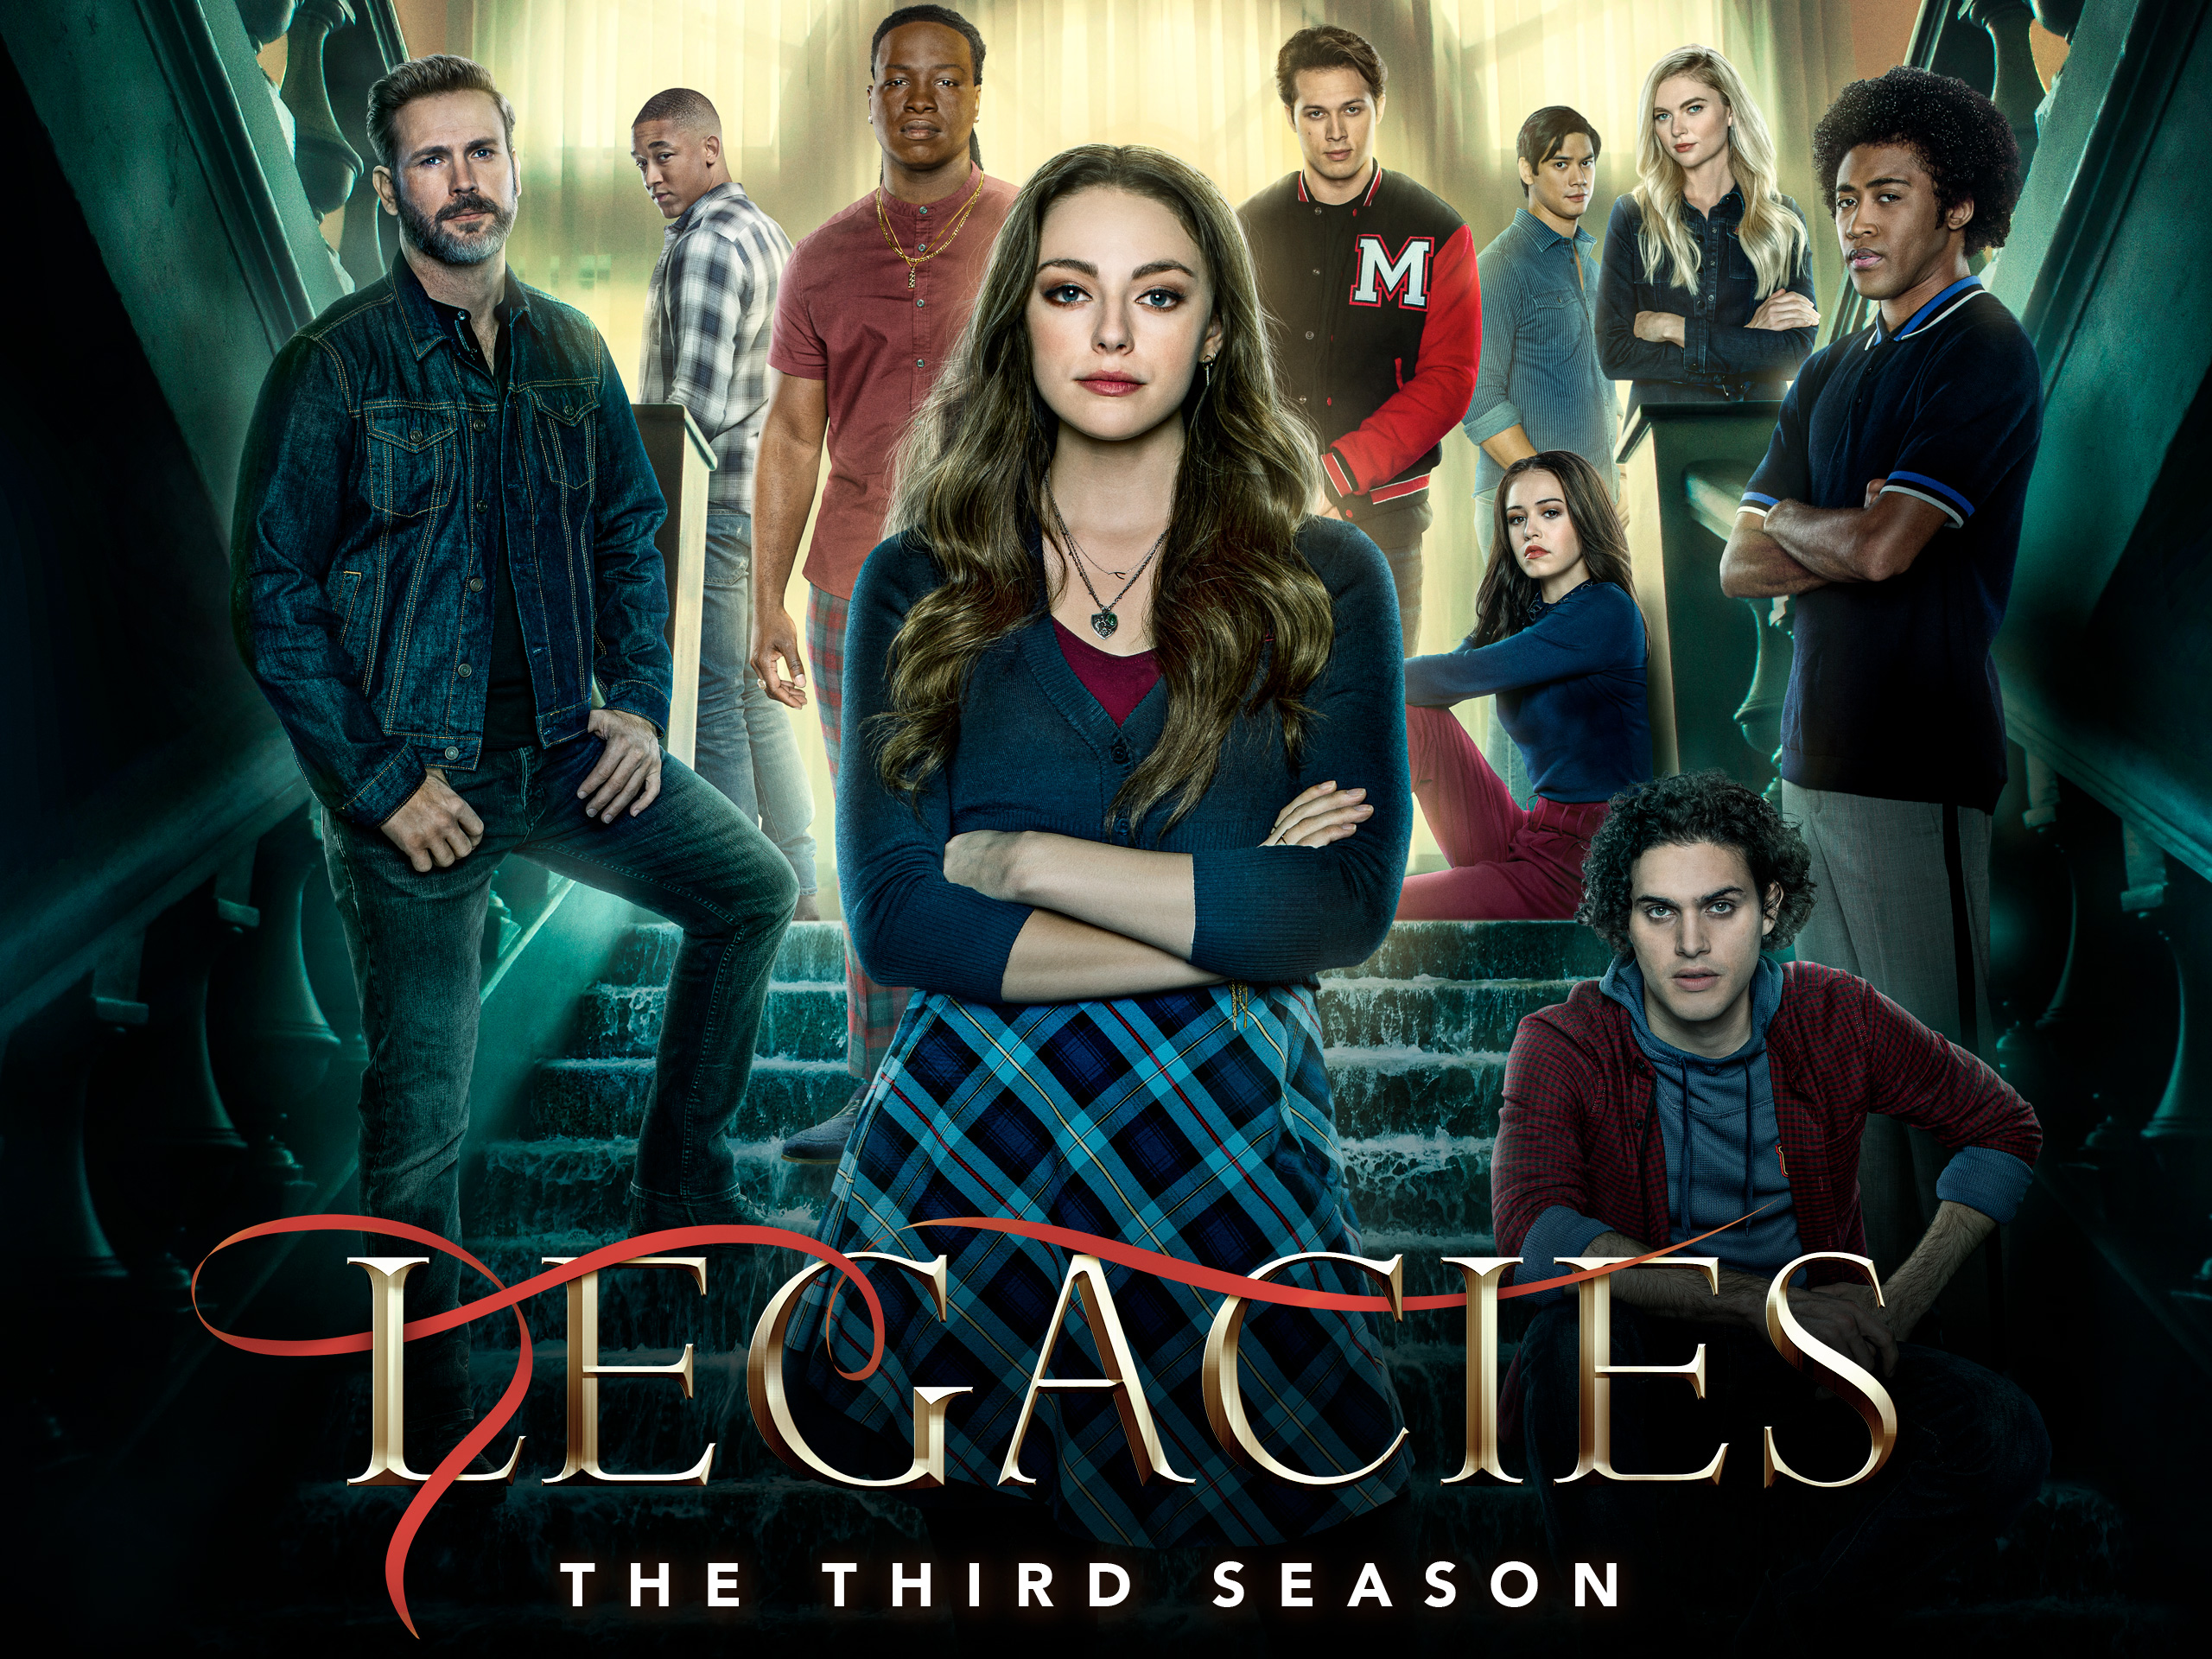 “Legacies” Season 3 Watch Online For Free – Amazon Prime Video